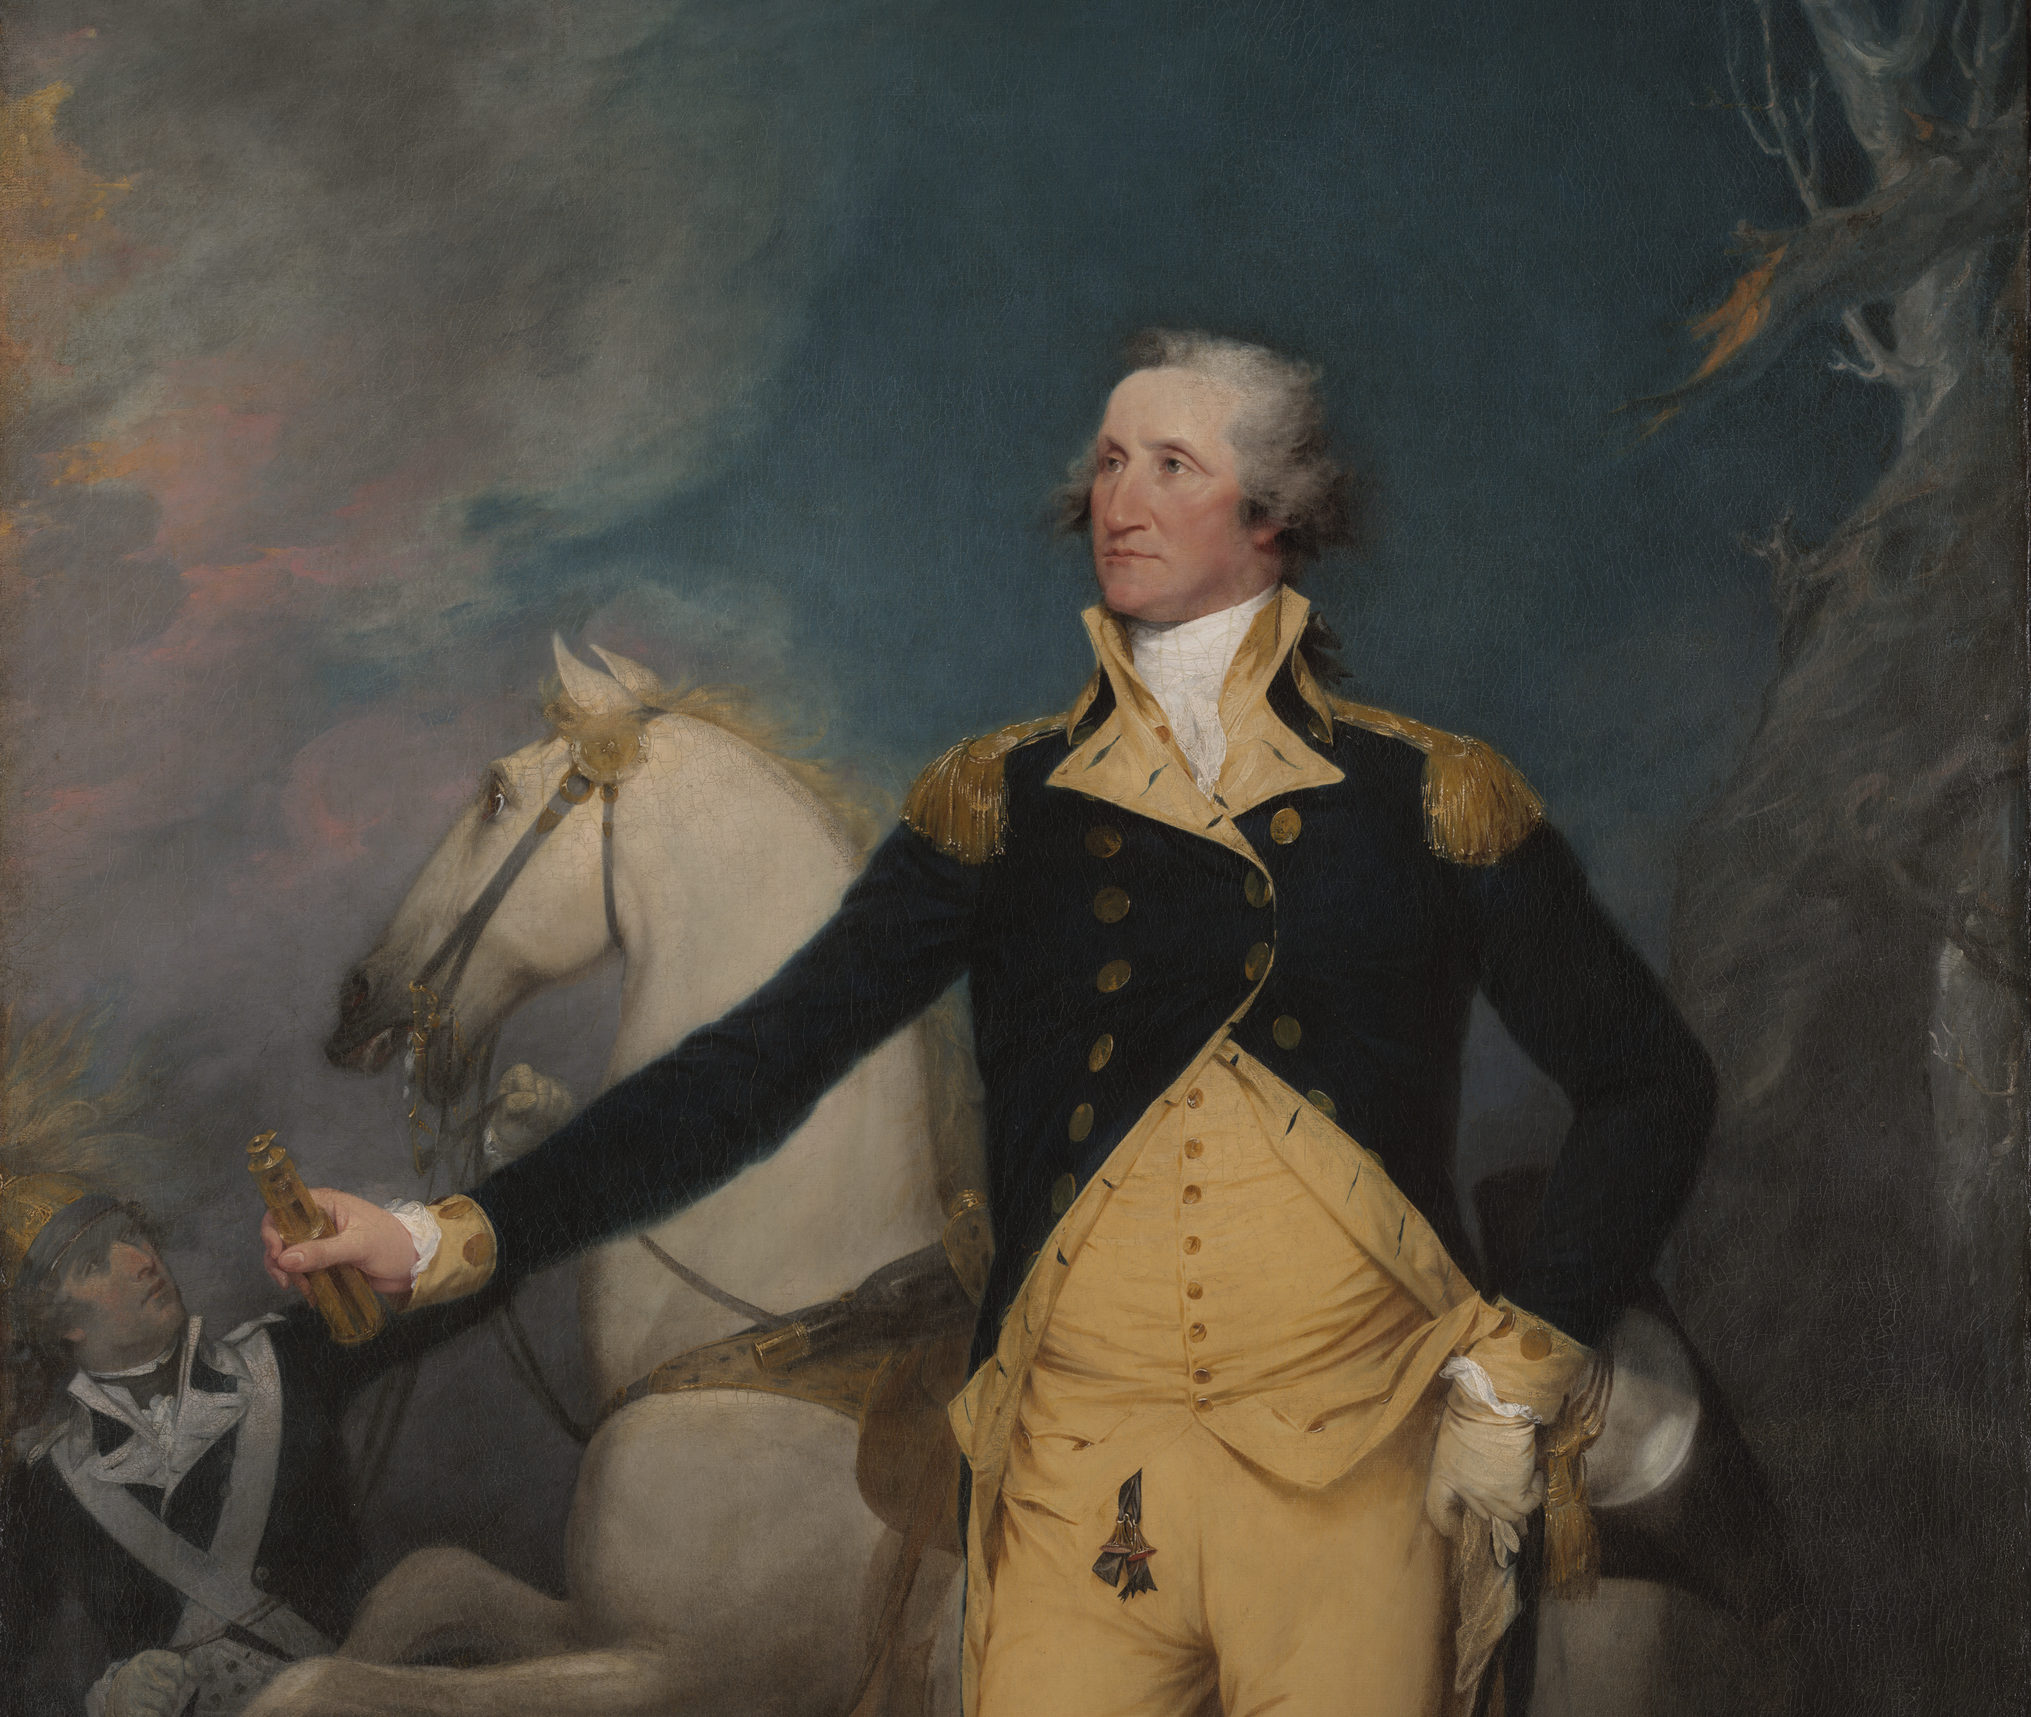 General_George_Washington_at_Trenton_by_John_Trumbull-e1519055282592.jpeg